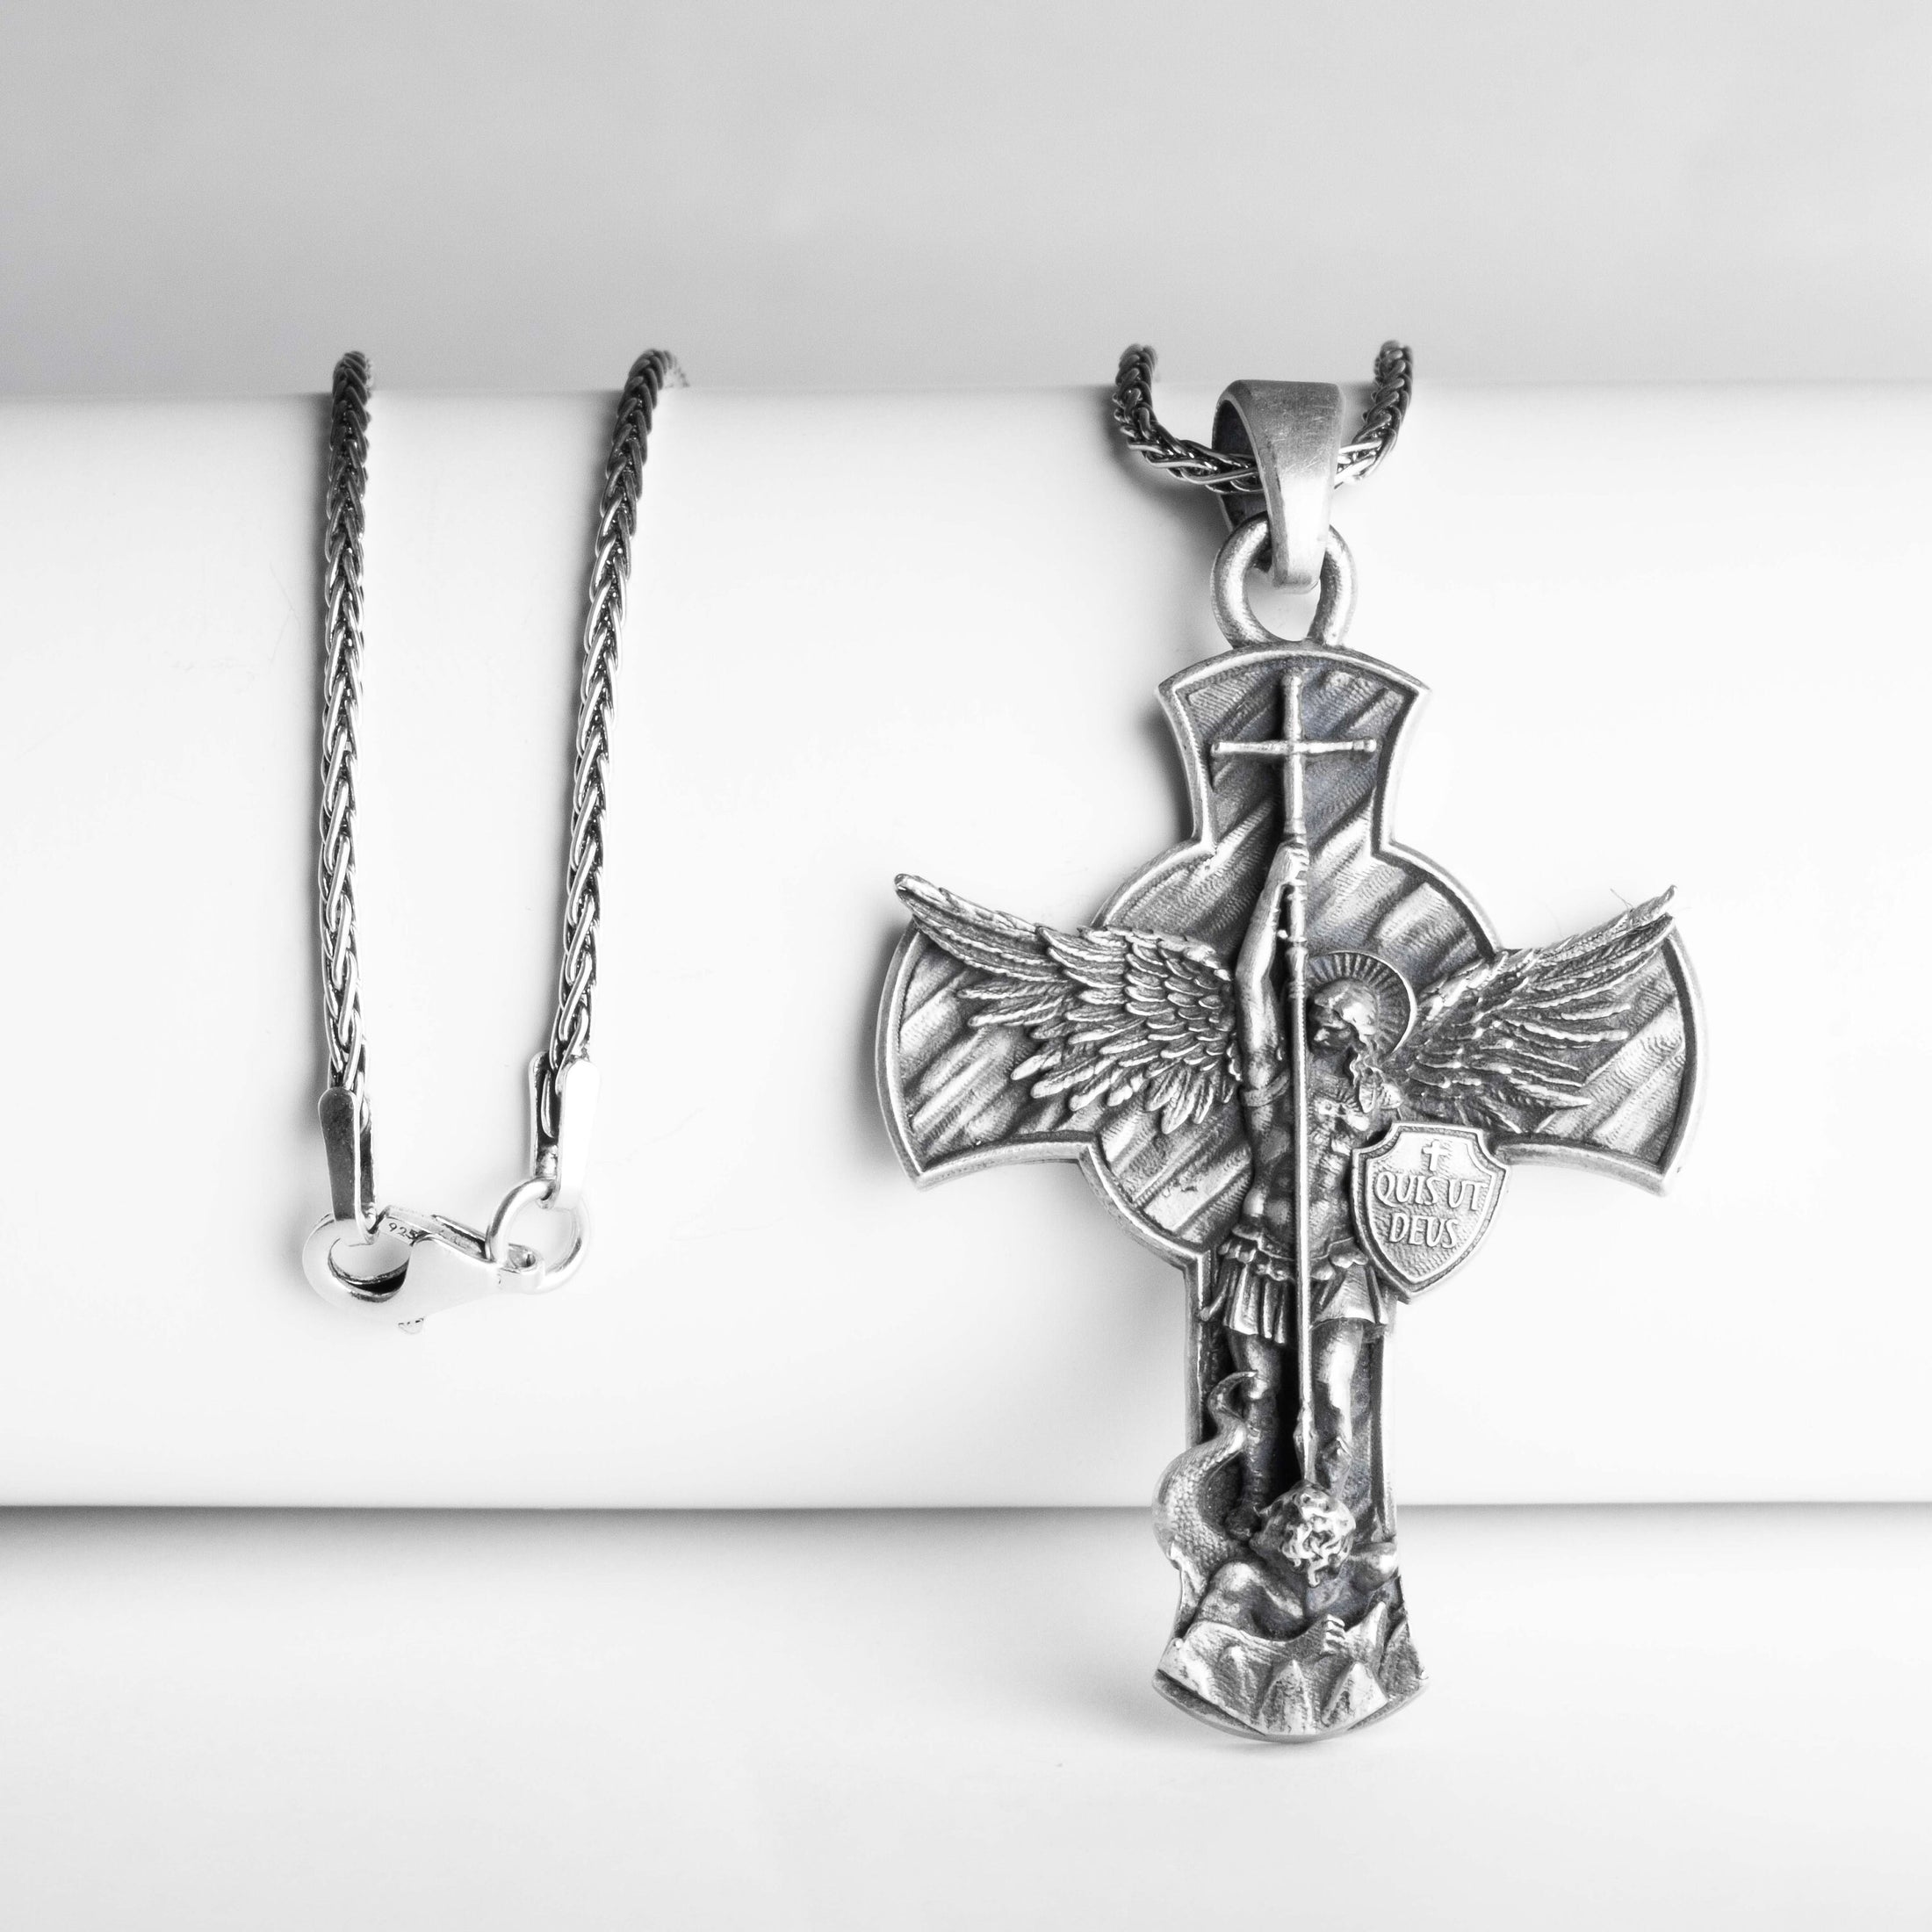 St Archangel Michael Pendant Satan, Michael Defeating Satan, Religious Jewelry, Christian Necklace, Guardian Angel Gift